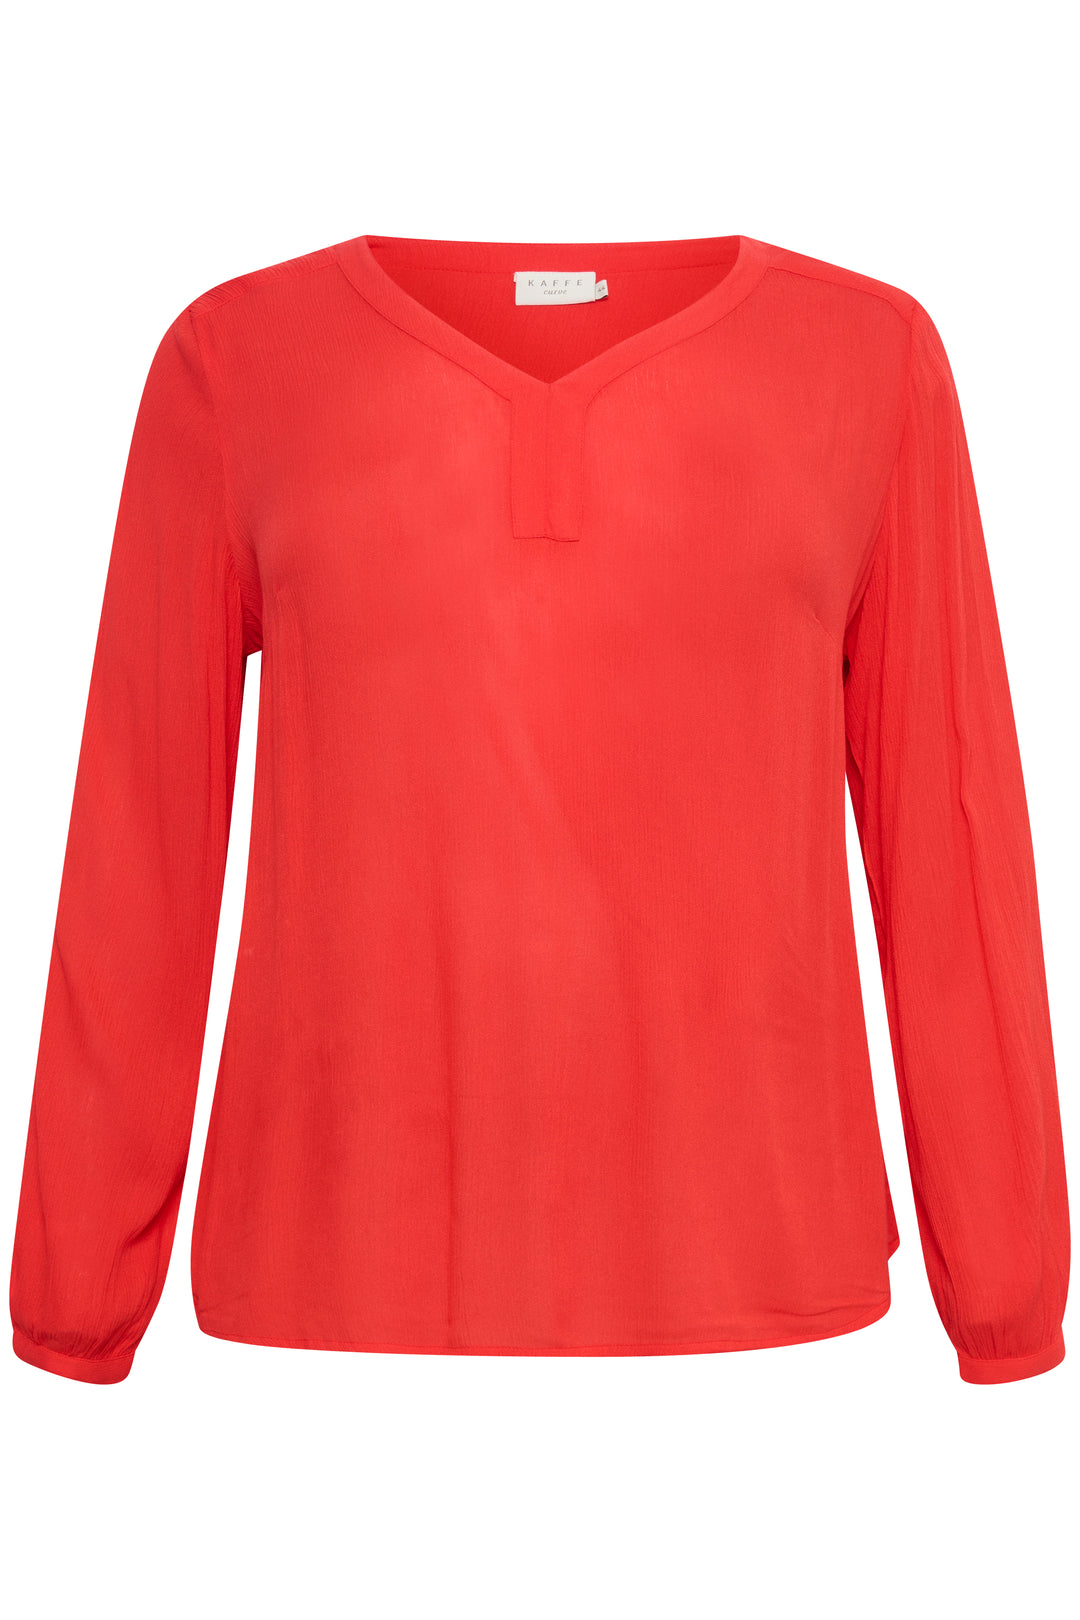 tijdloze fiery red blouse van ecovero viscose